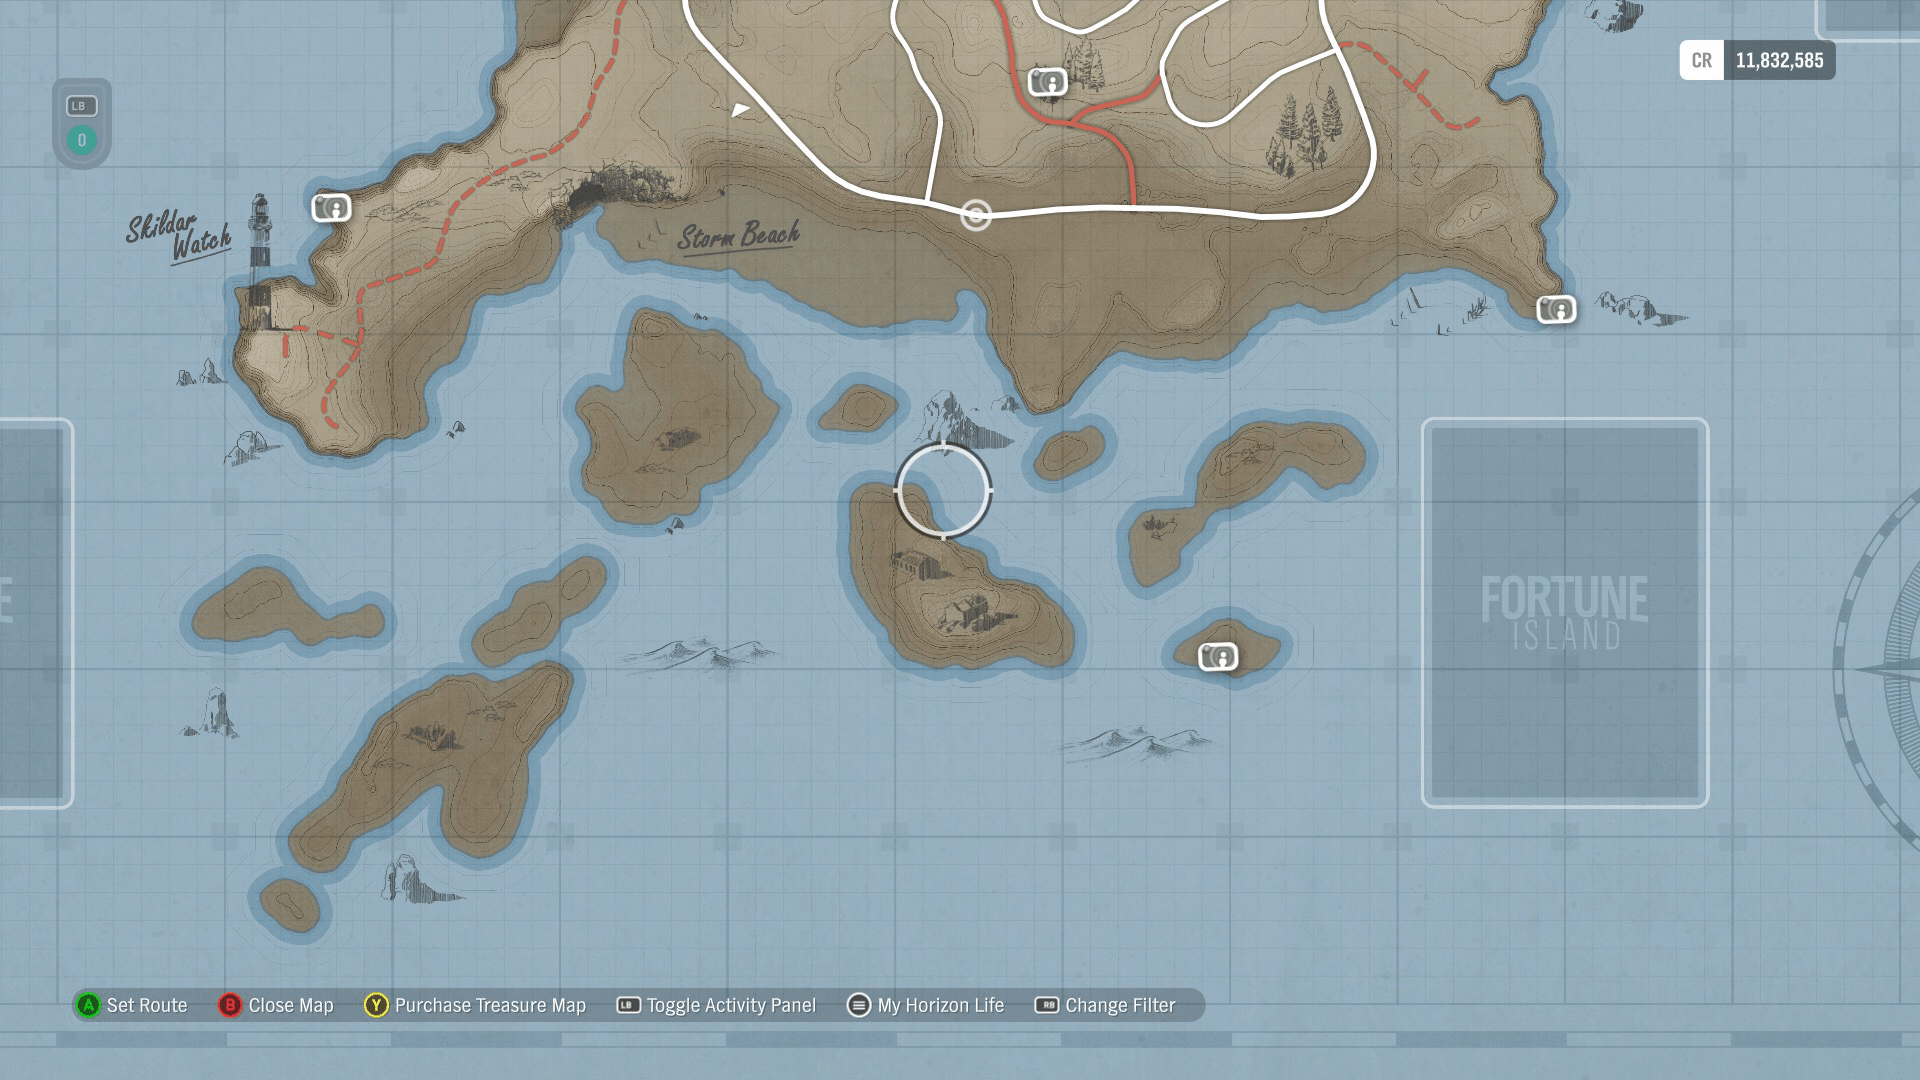 Forza horizon 4 island. Карта сокровищ Forza Horizon 4 Fortune Island. Карта сокровищ Forza Horizon 4. Форза 4 Форчун Айленд сокровища. Стенды влияния Forza Horizon 4 Fortune Island.